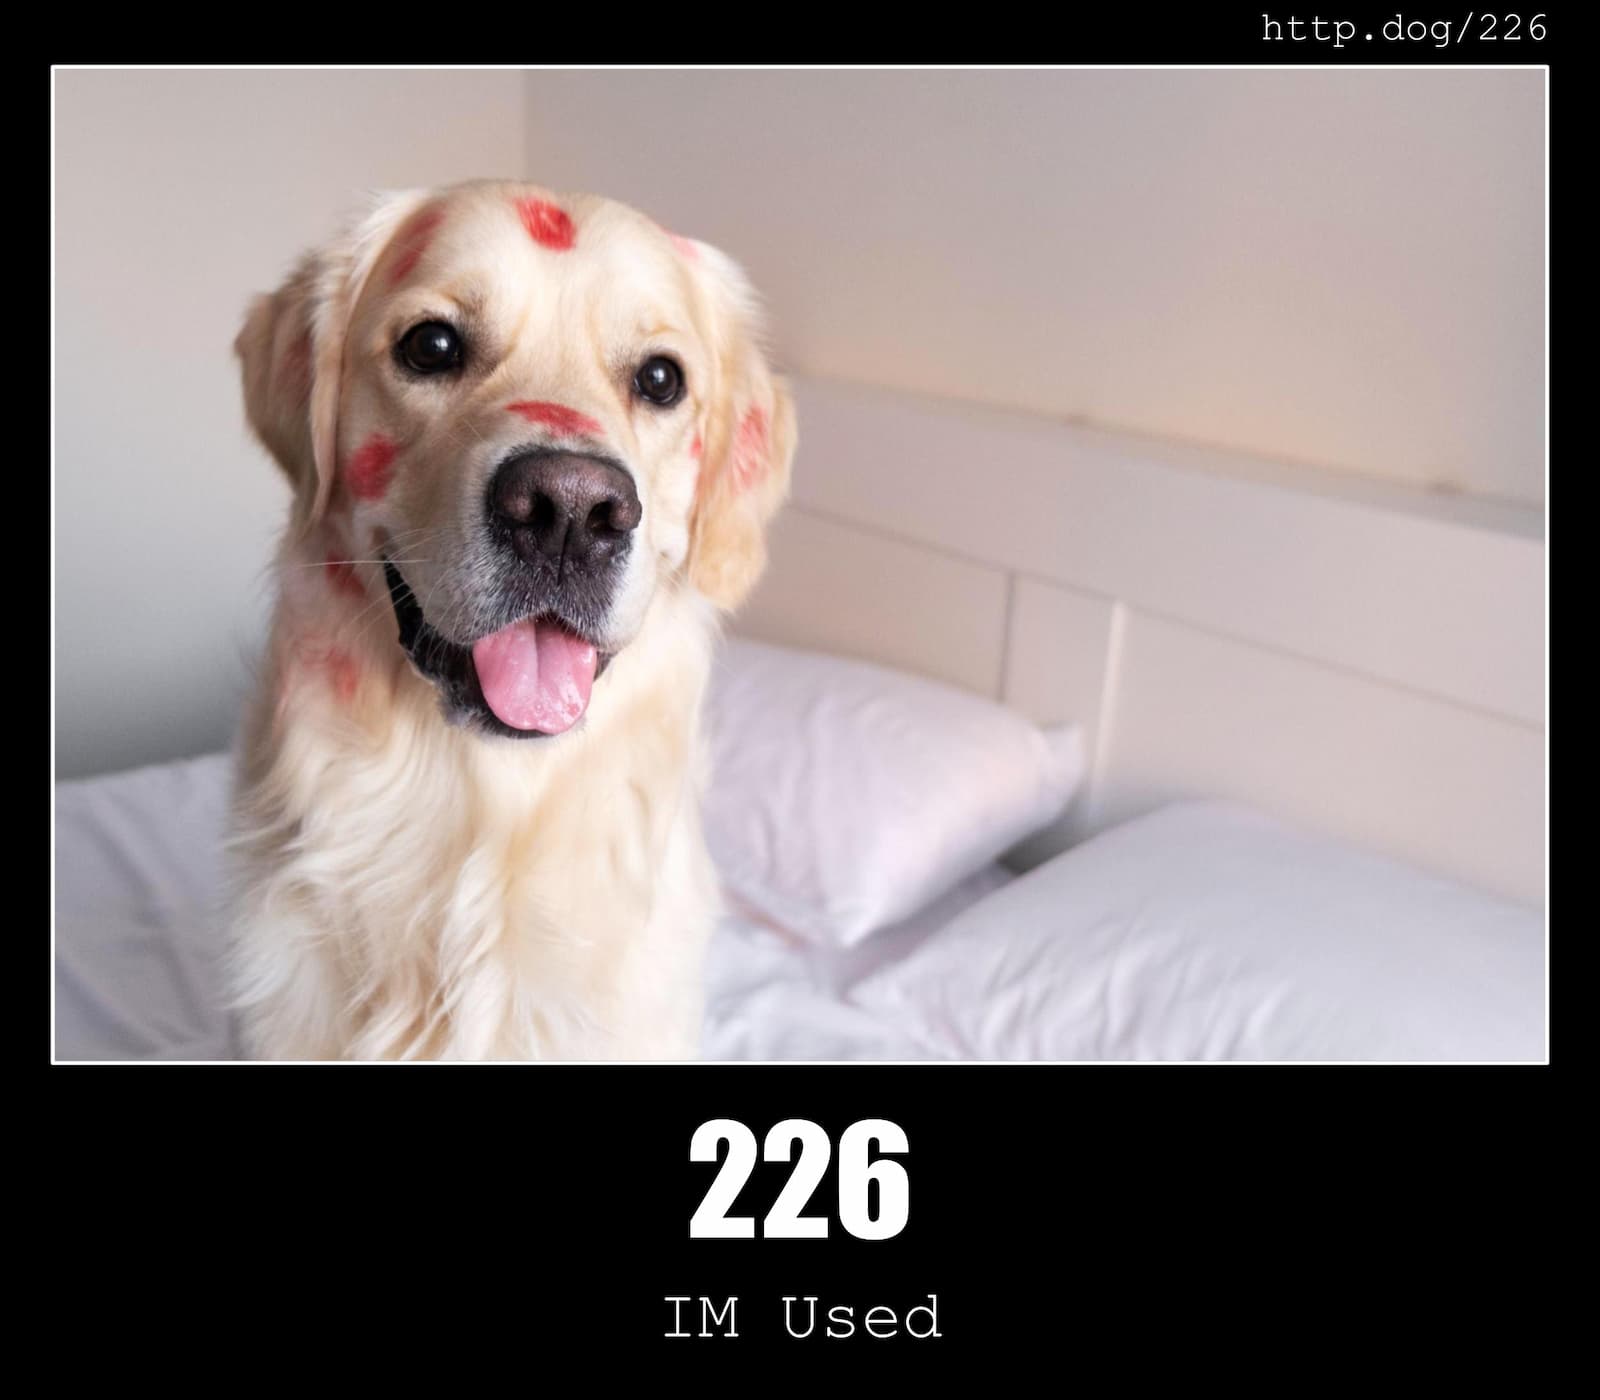 HTTP Status Code 226 IM Used & Dogs